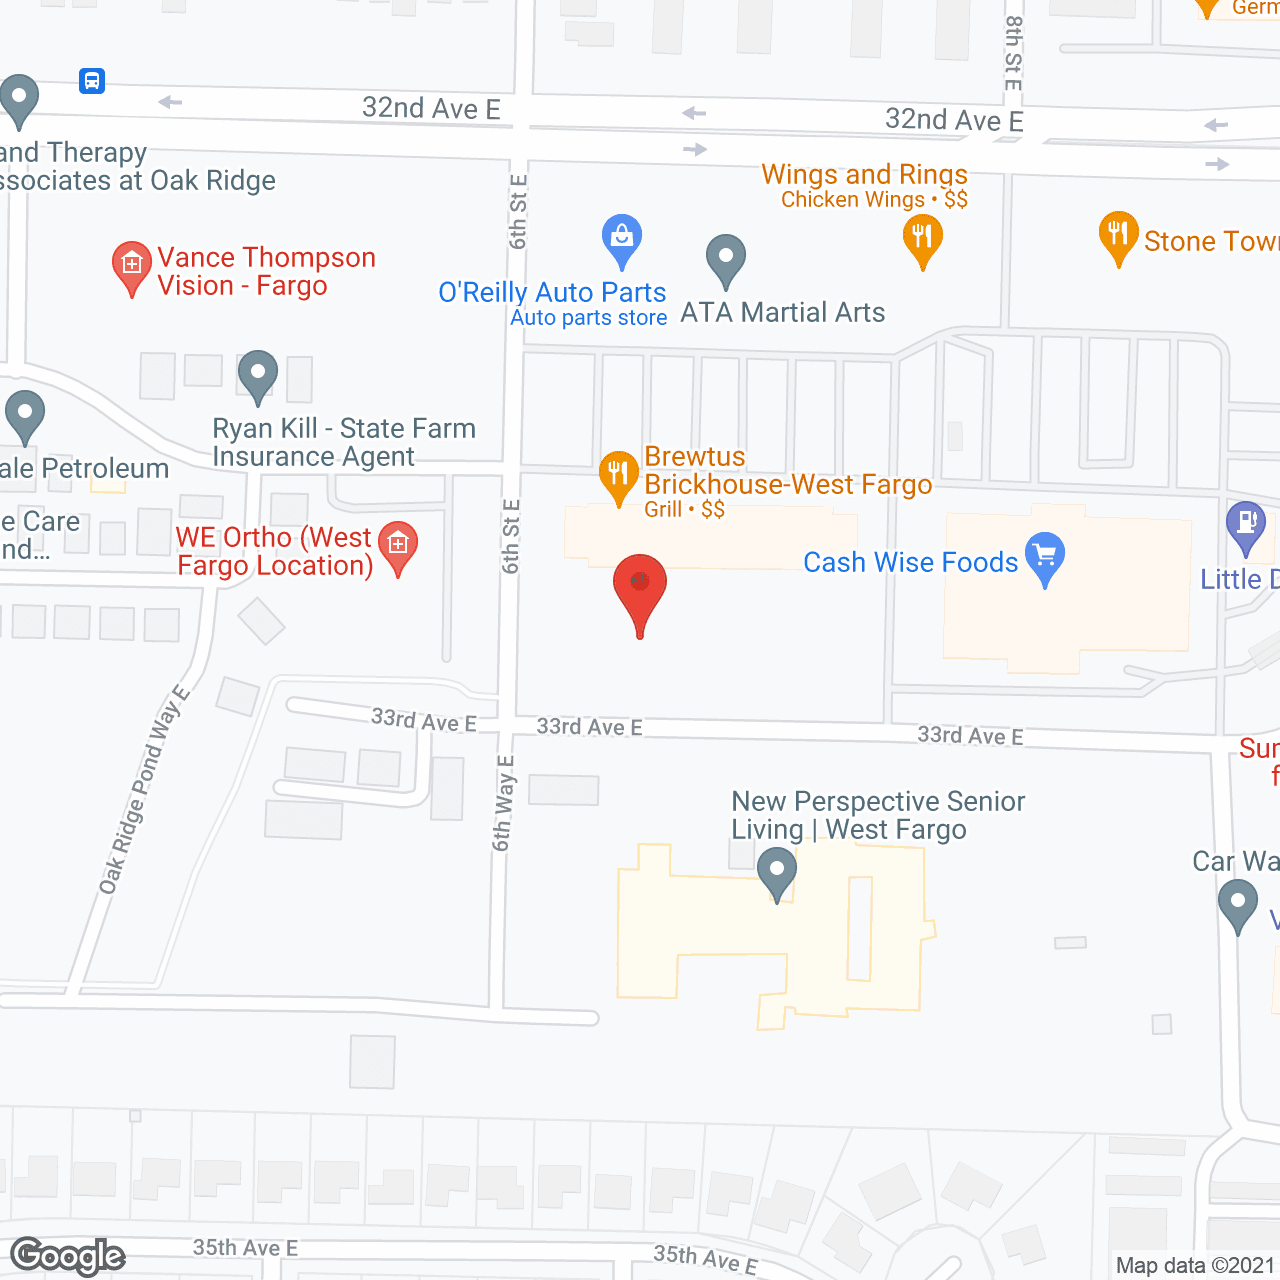 New Perspective Senior Living West Fargo in google map